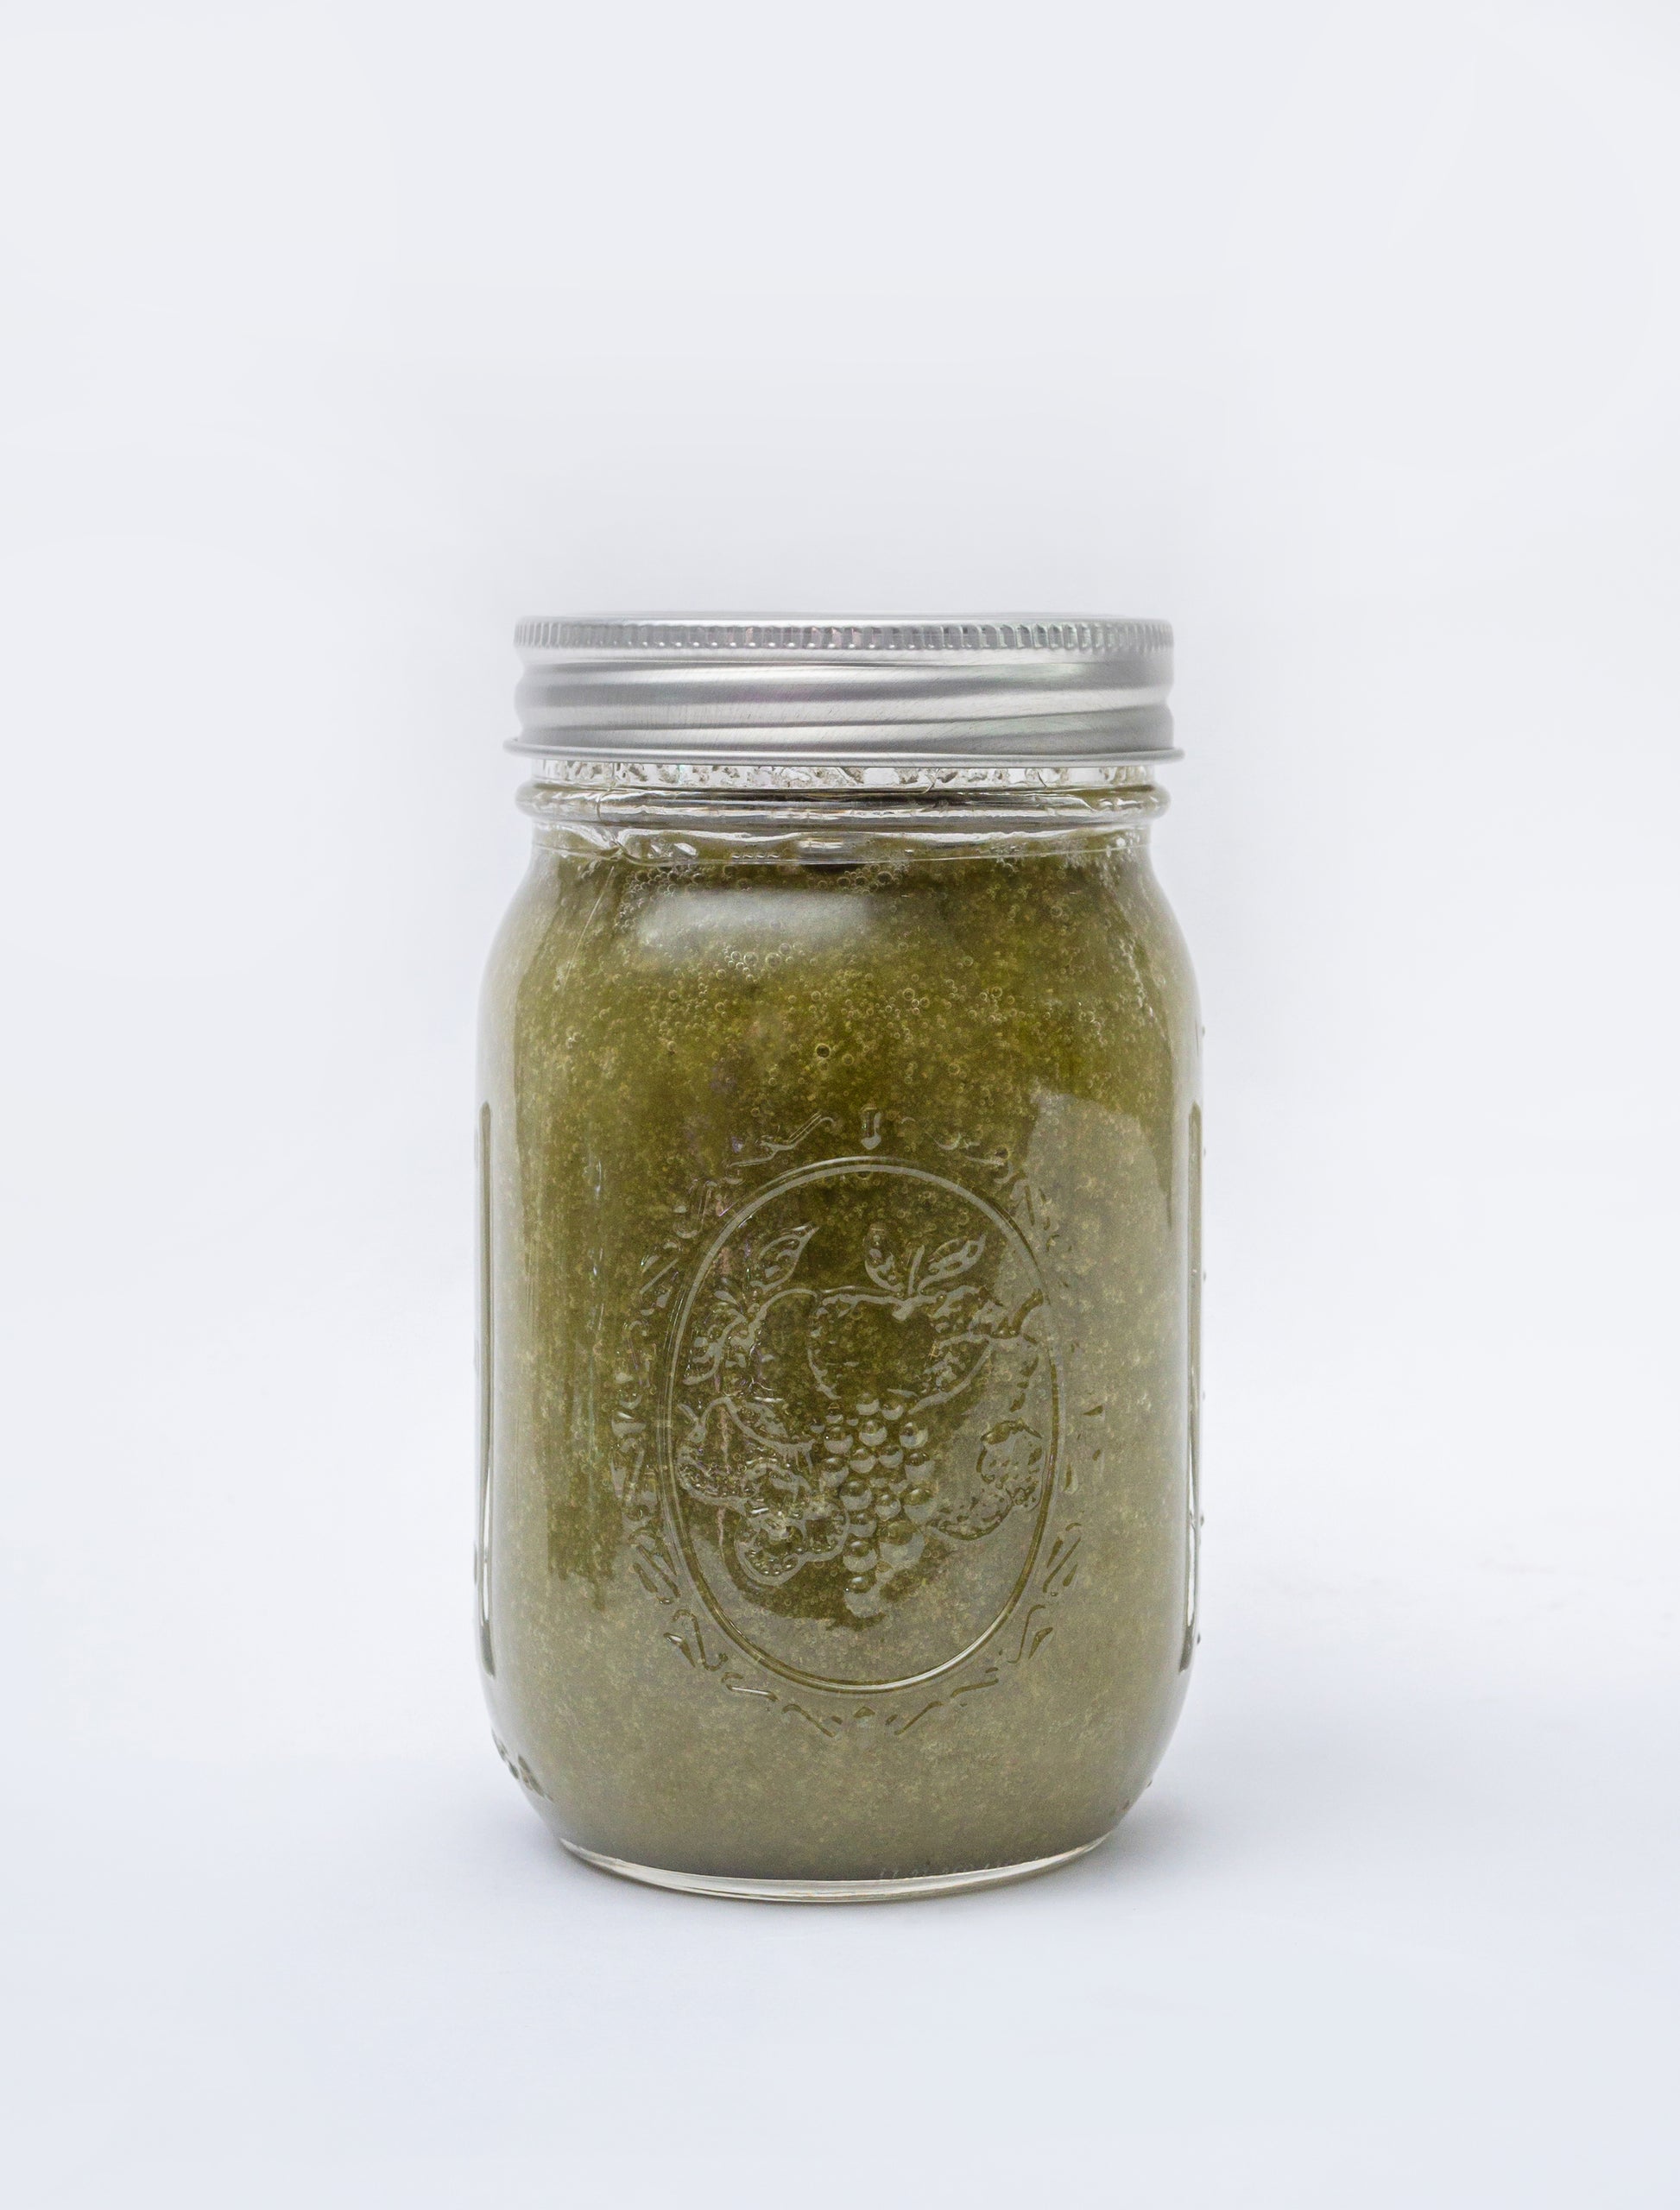  Organic Moringa Sea Moss Gel 16oz